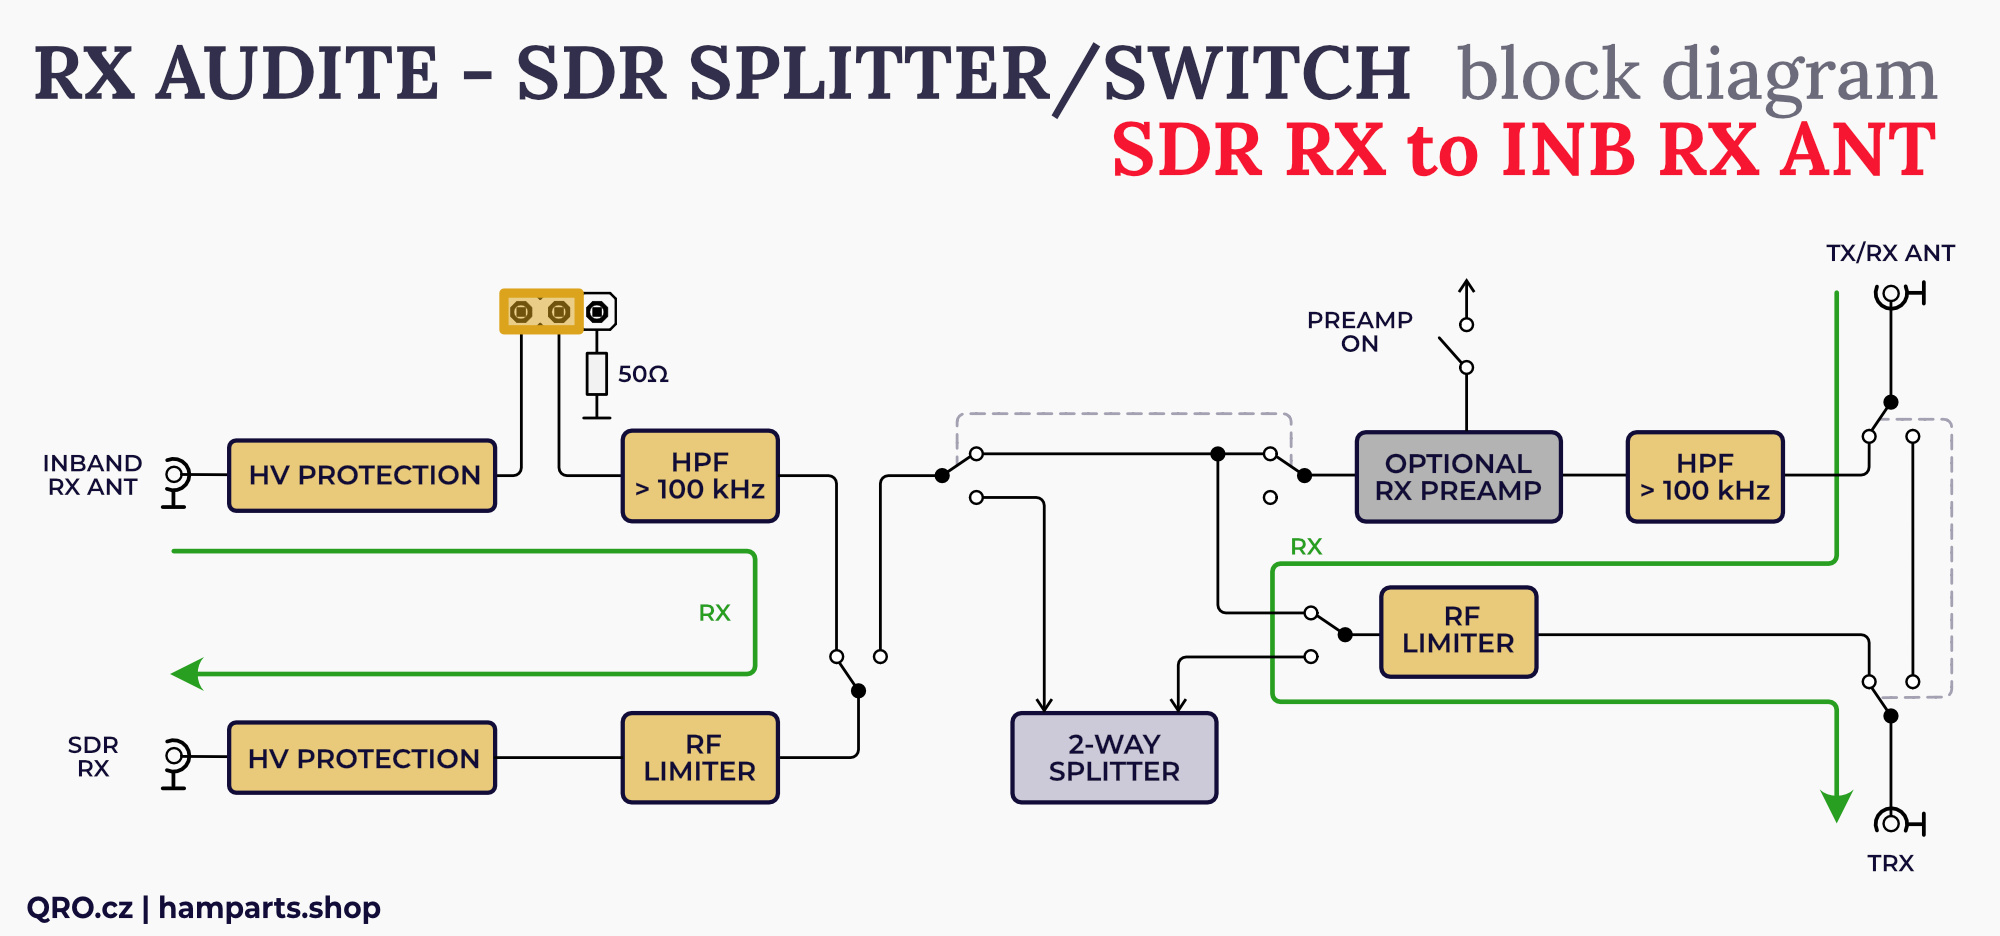 rx audite sdr switch block diagram by qro.cz hamparts.shop